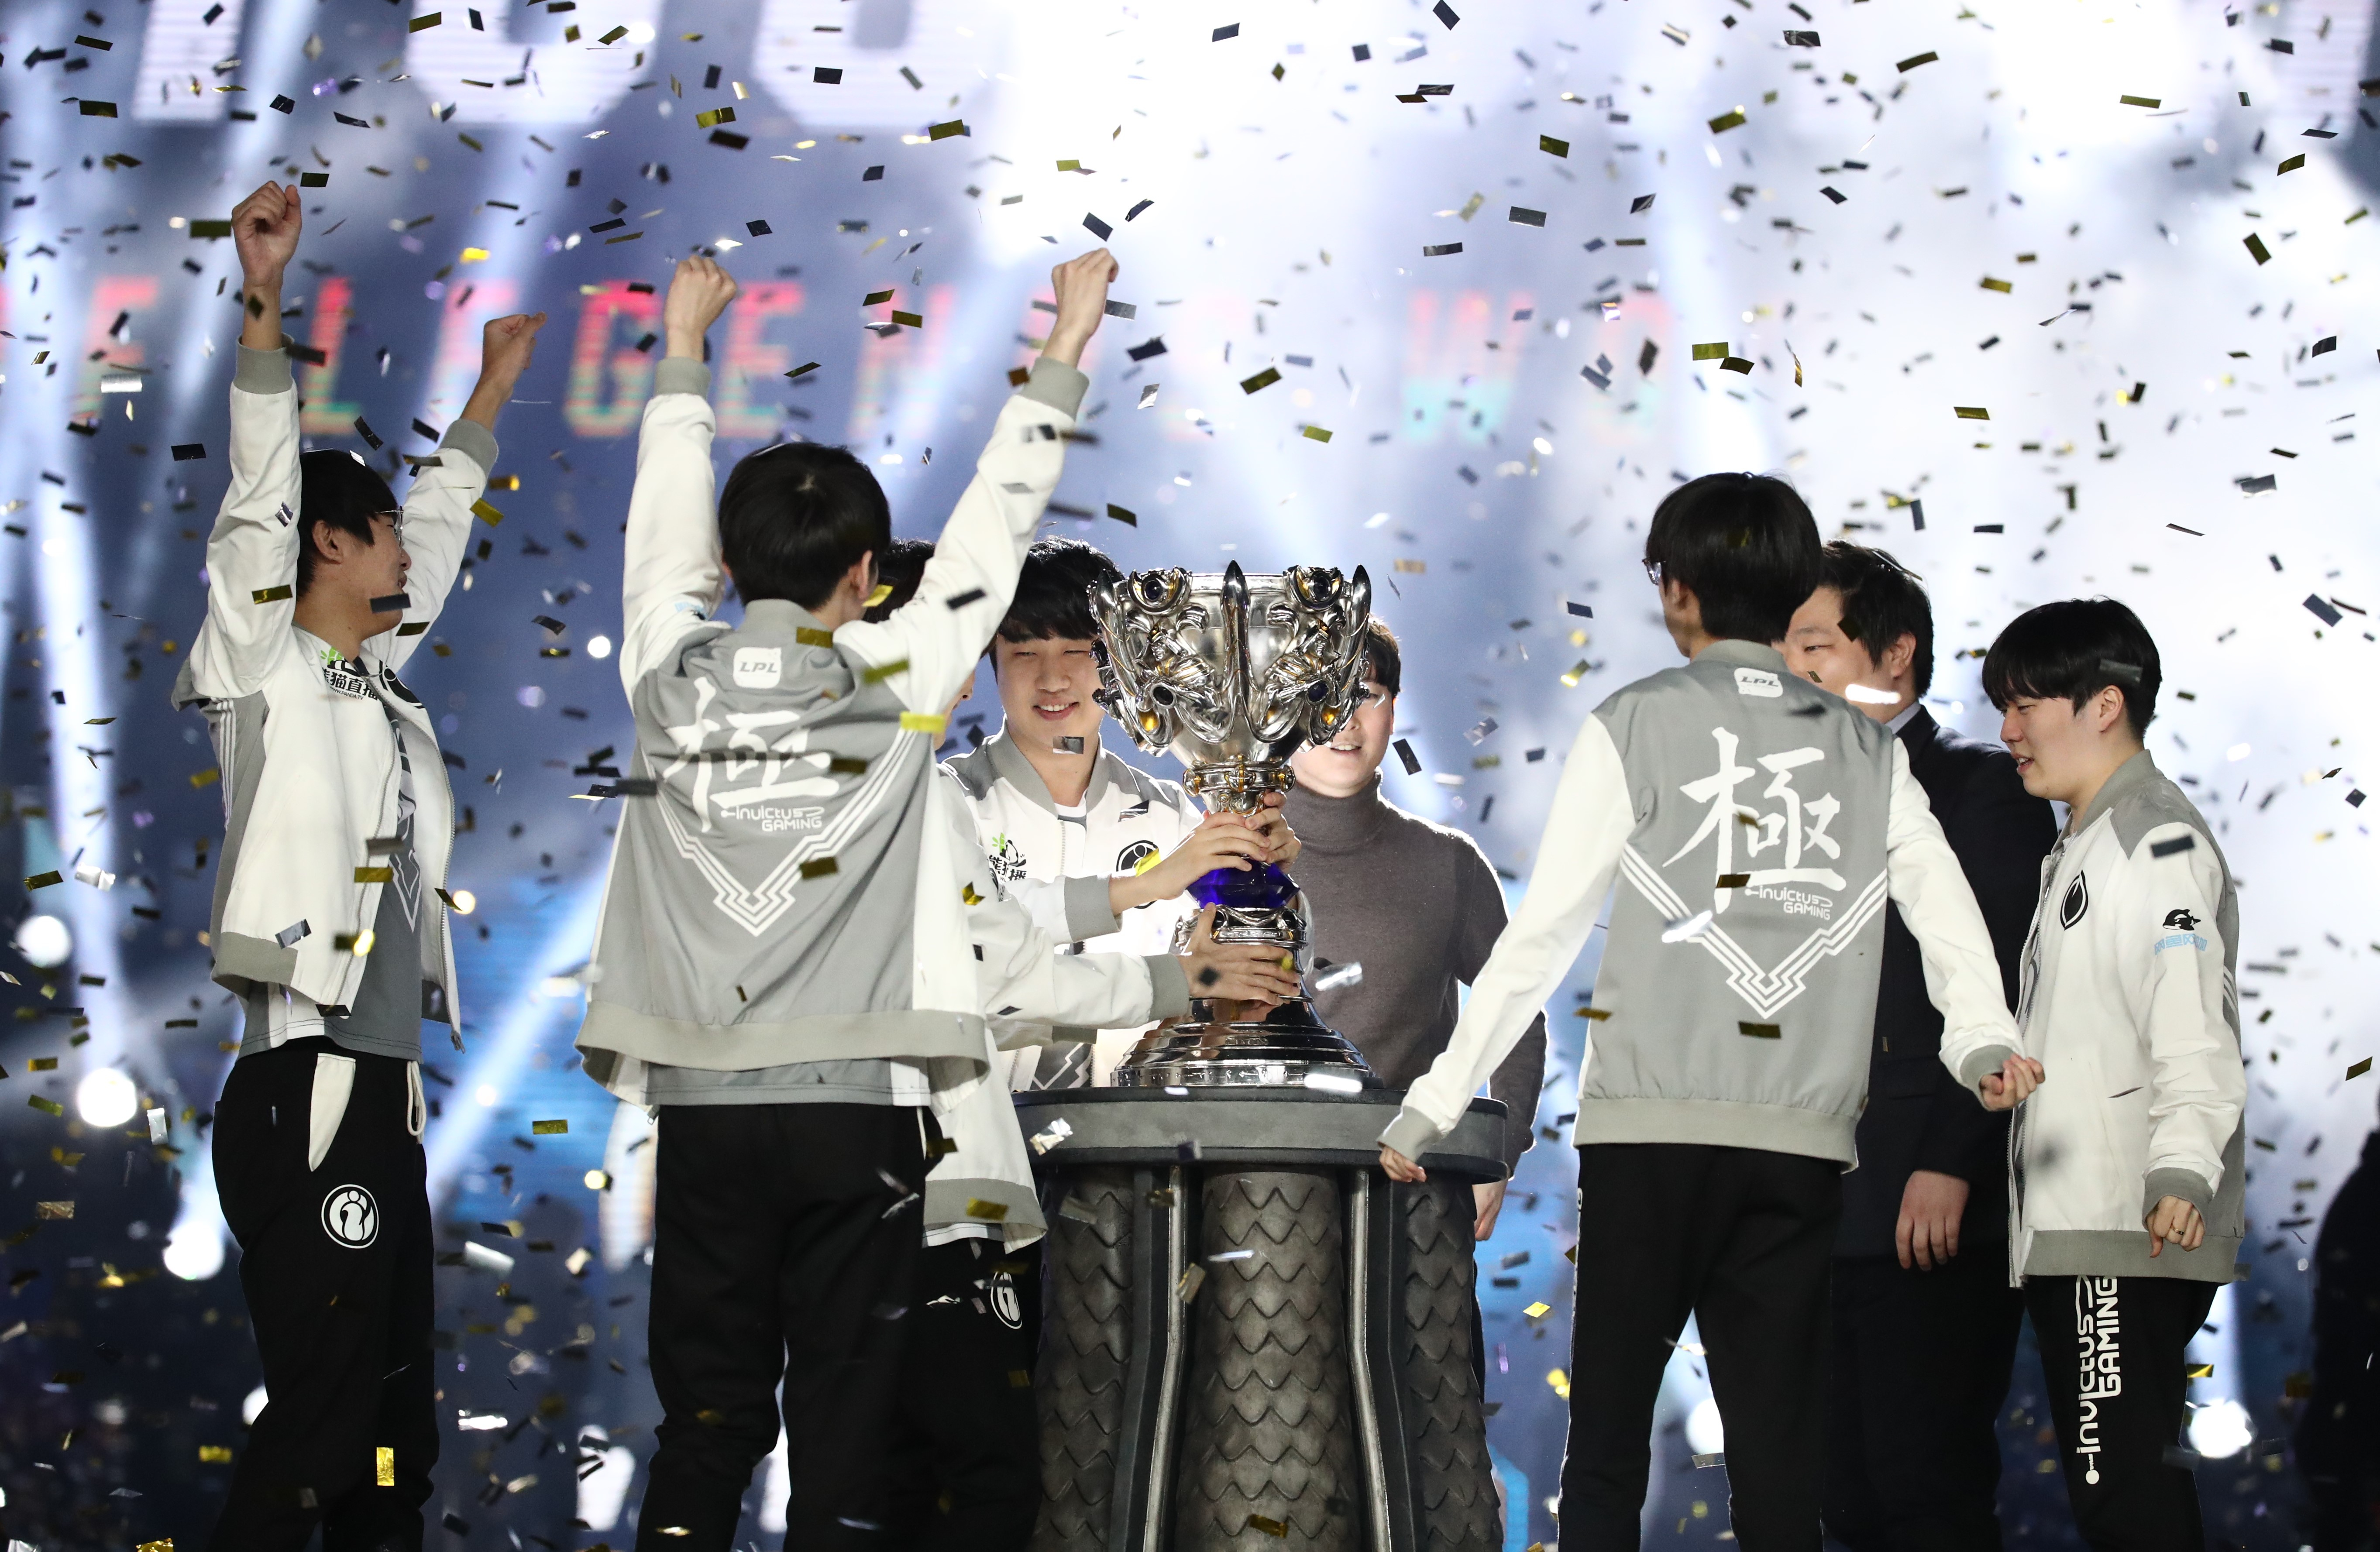 FPX wins second League of Legends World Championship title for LPL - CGTN